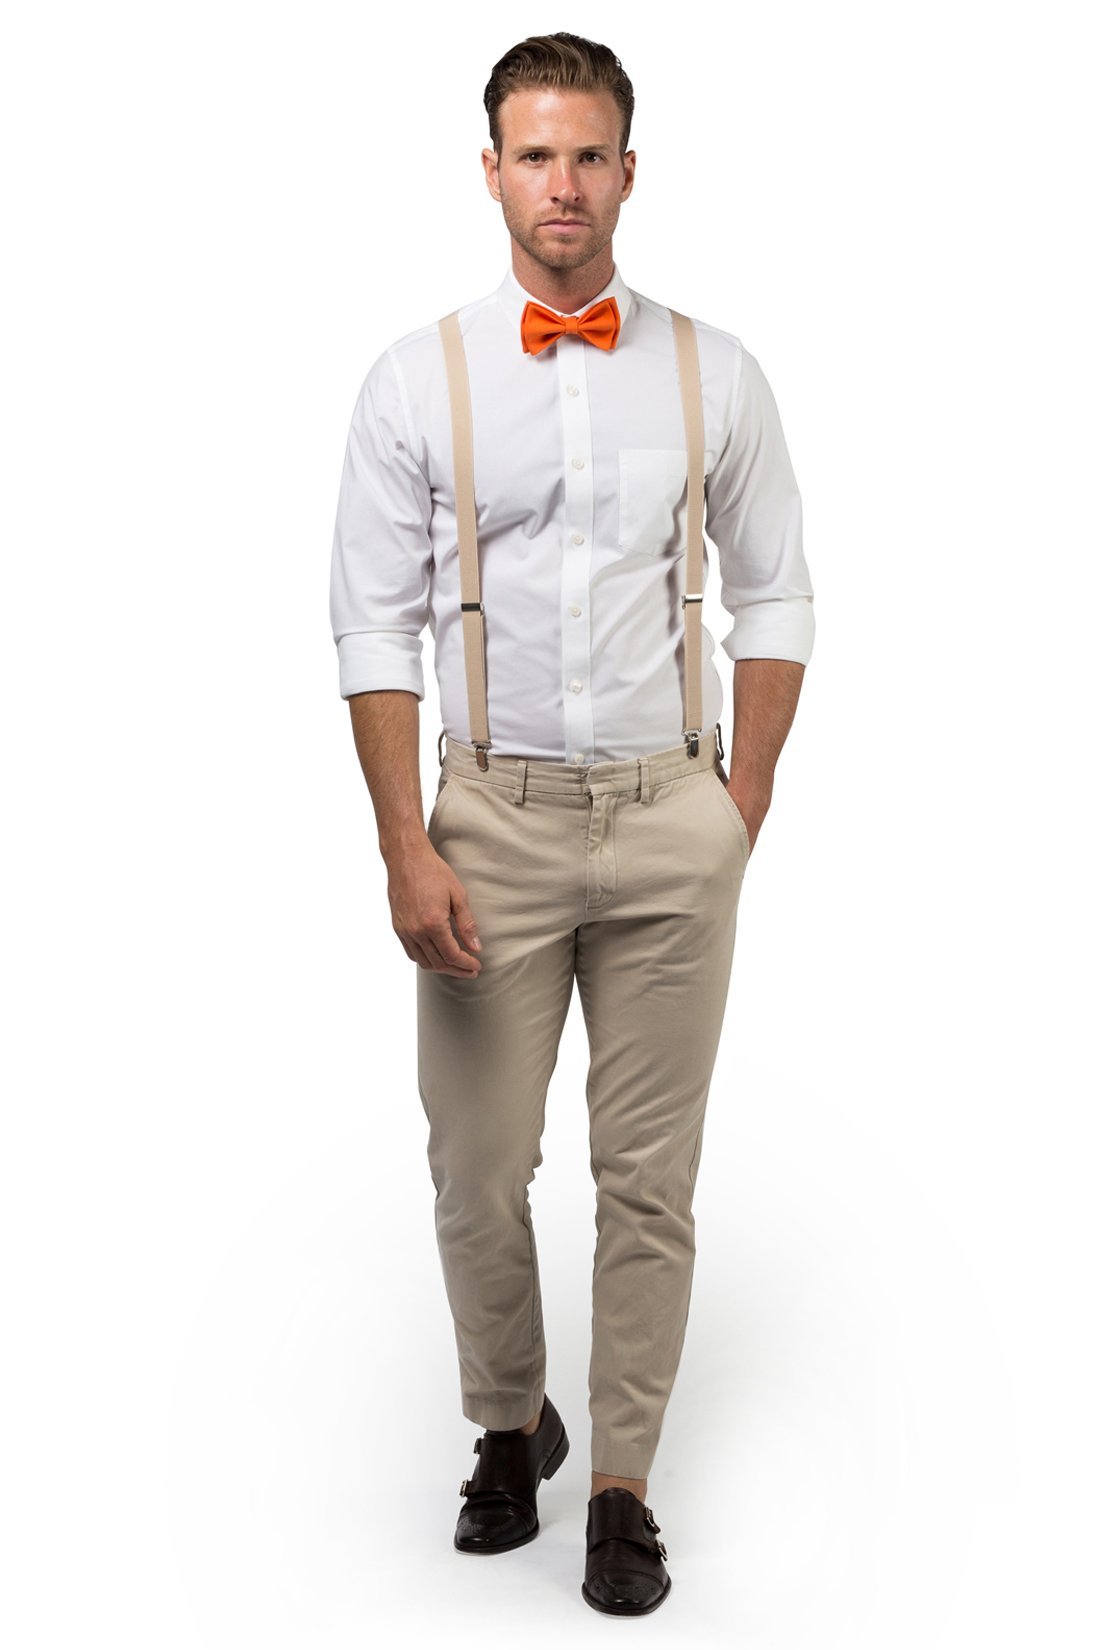 Beige Suspenders & Orange Bow Tie